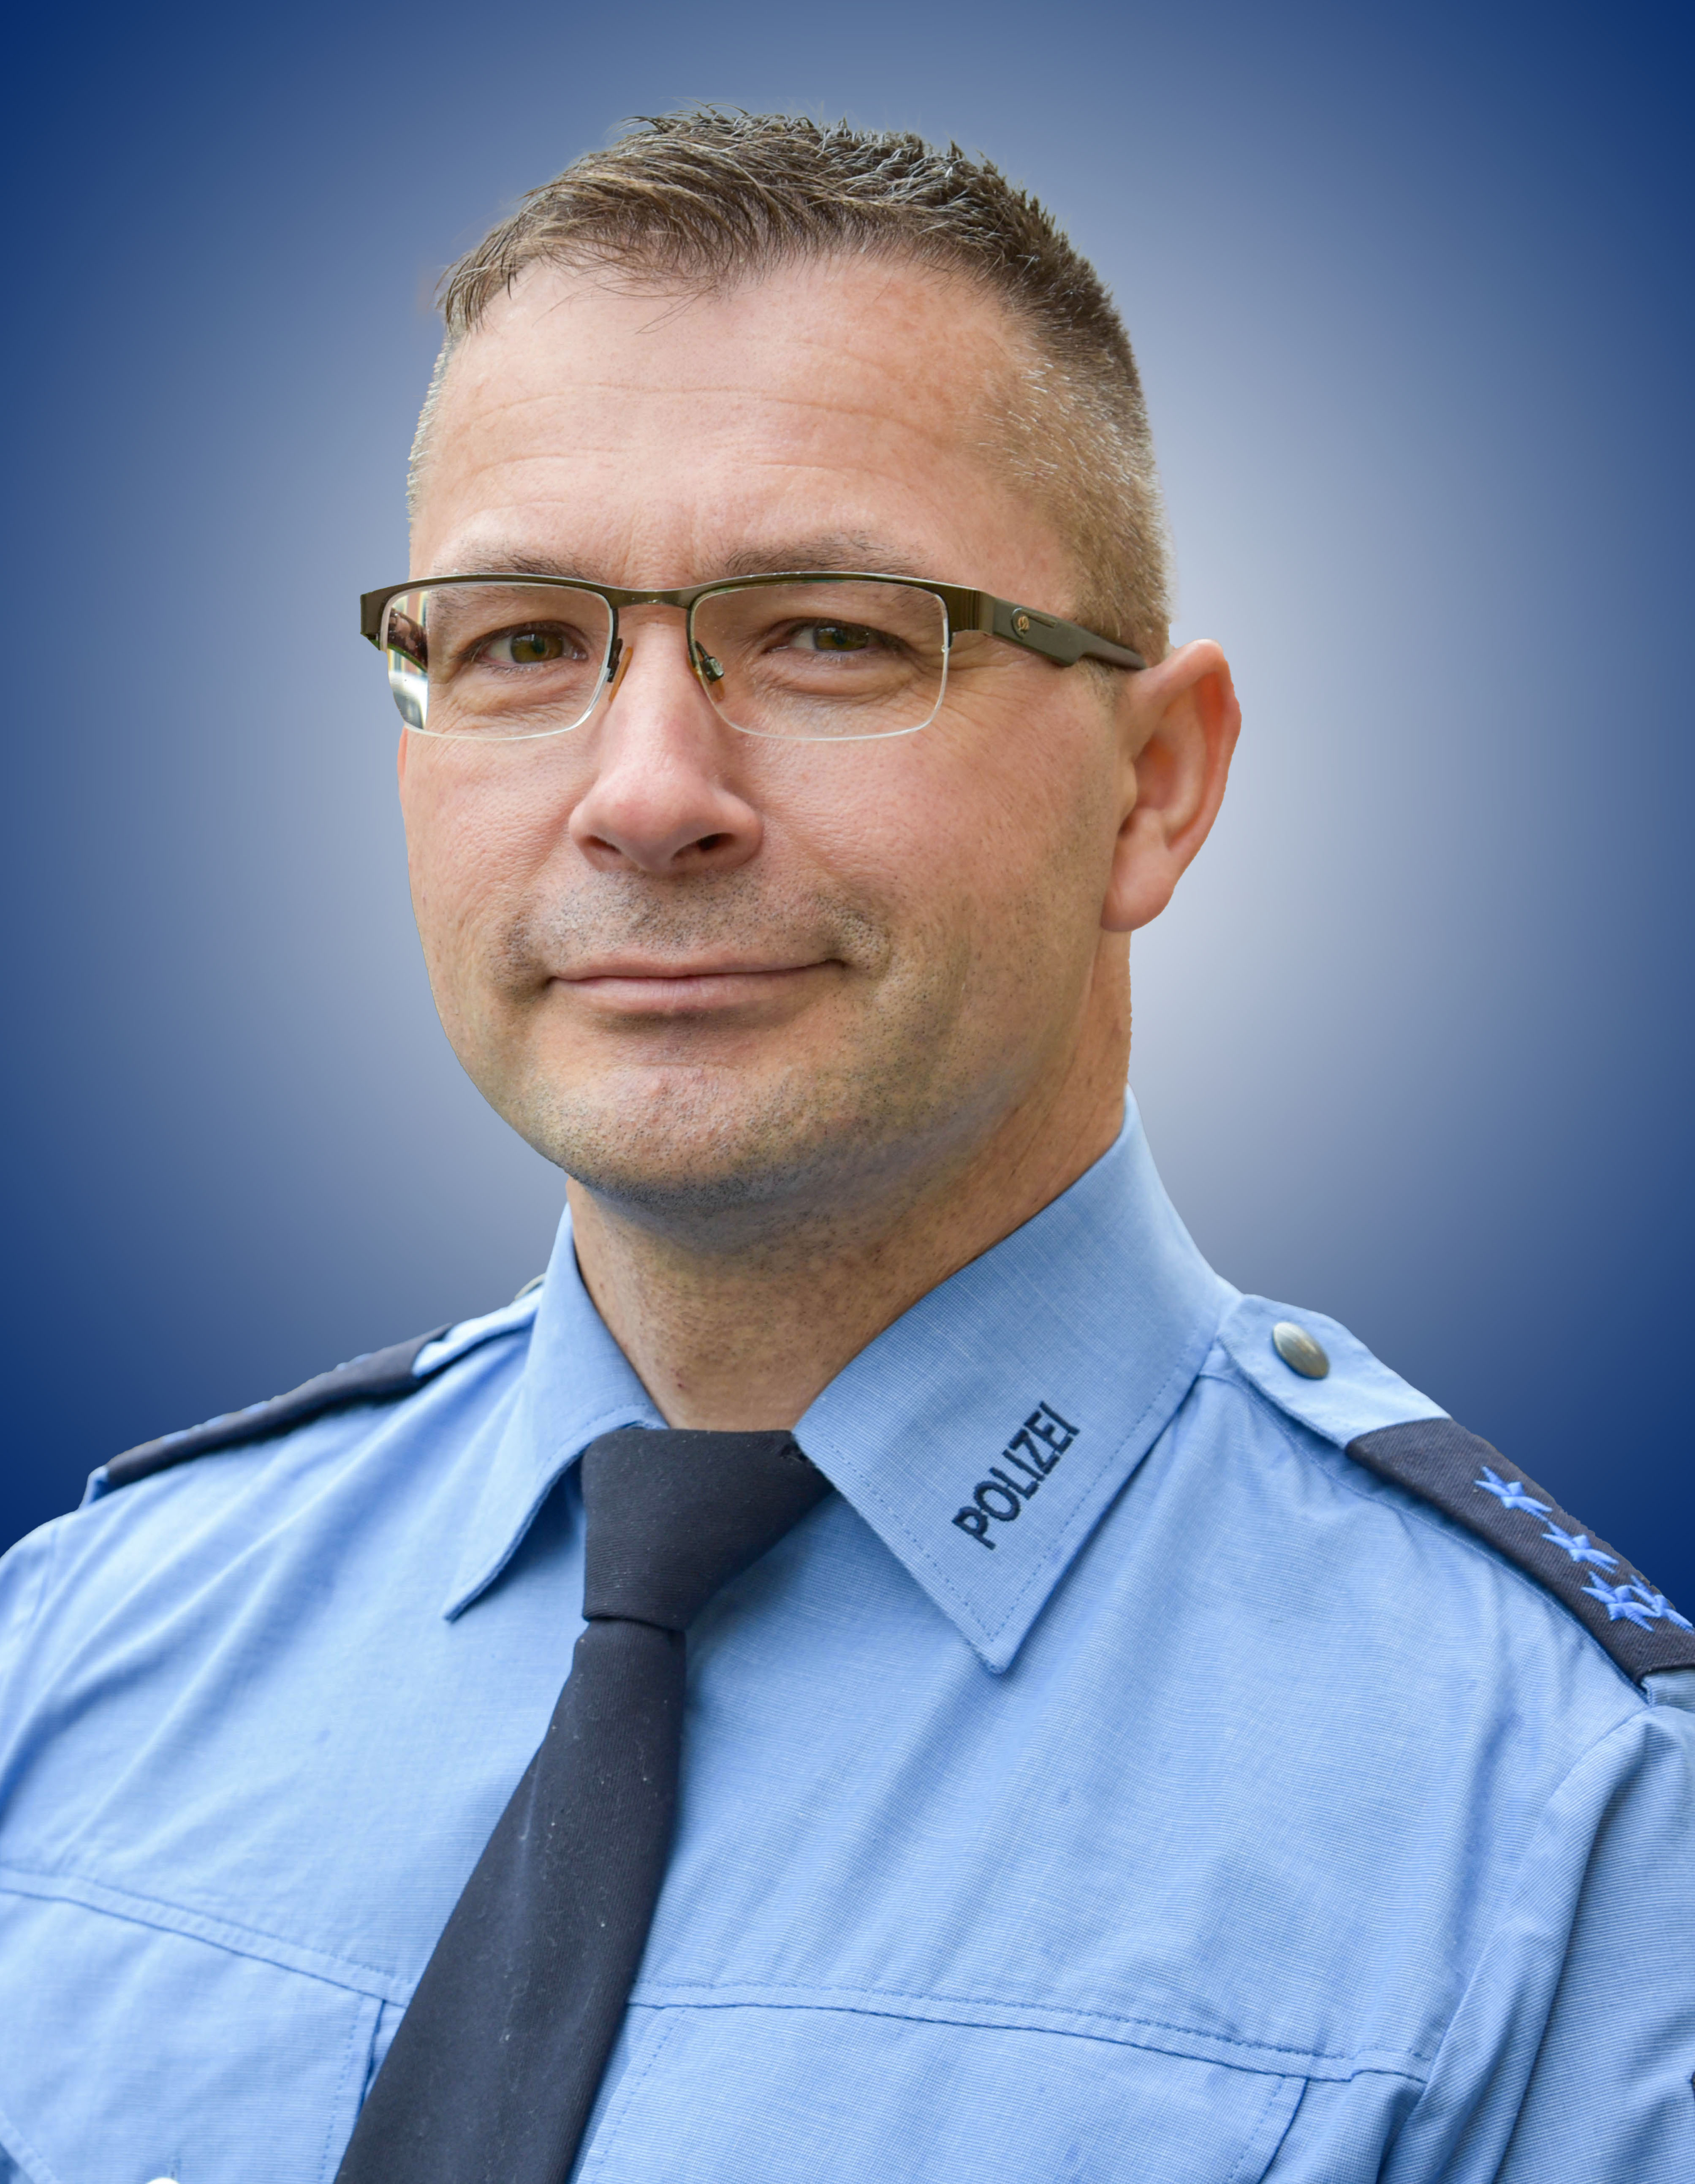 Polizeihauptmeister David Jentho